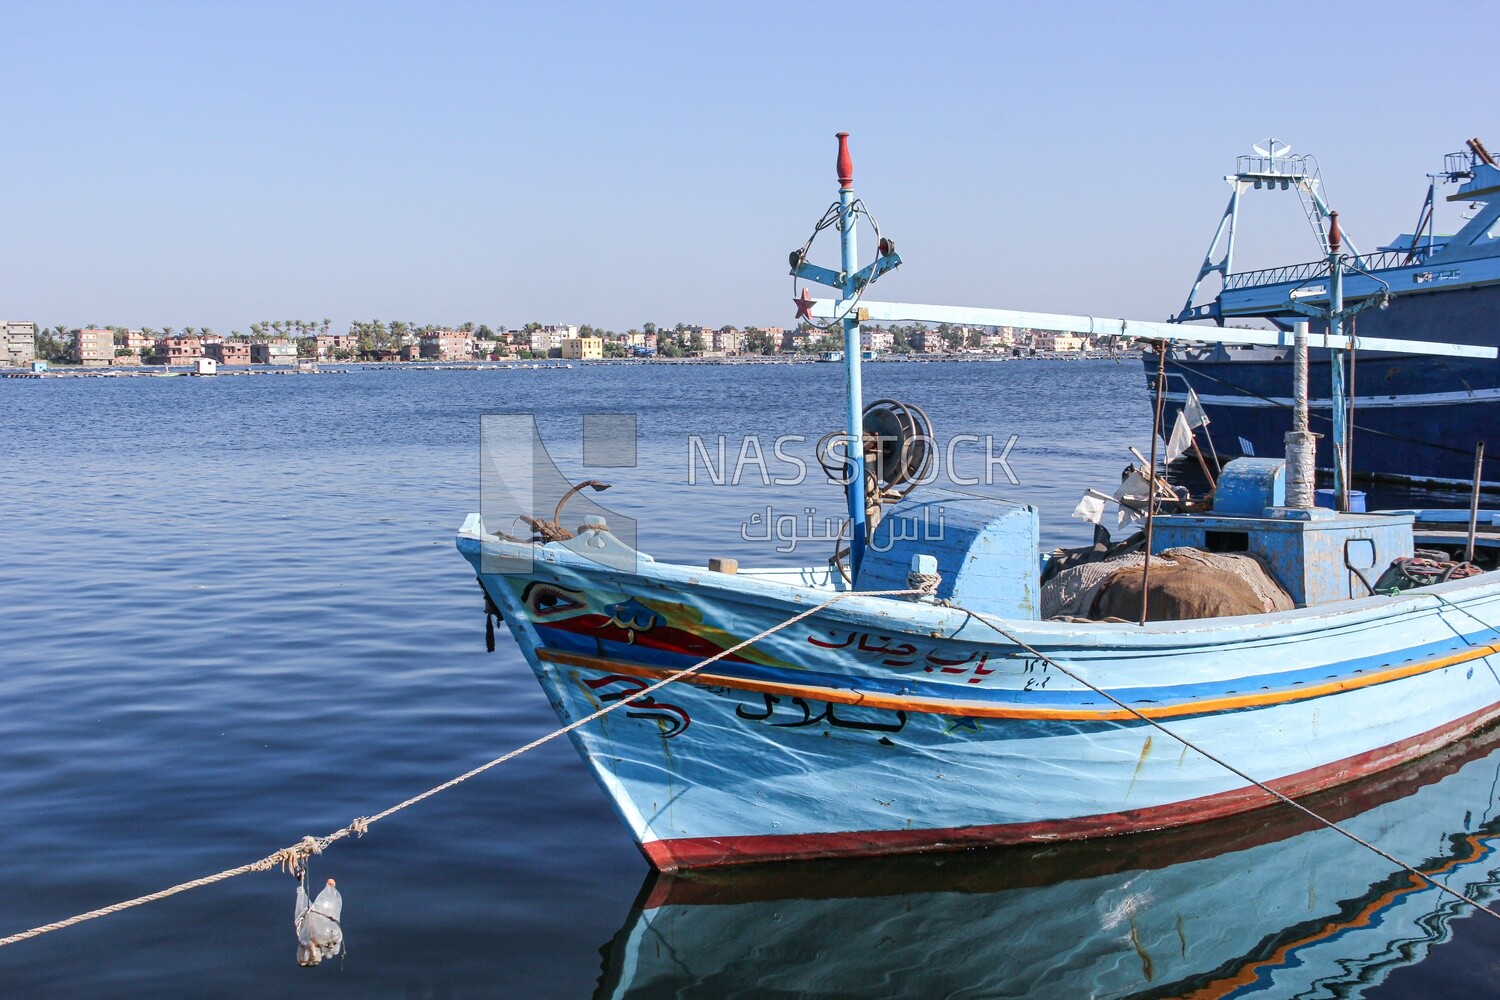 Nile boat moored in the Nile River